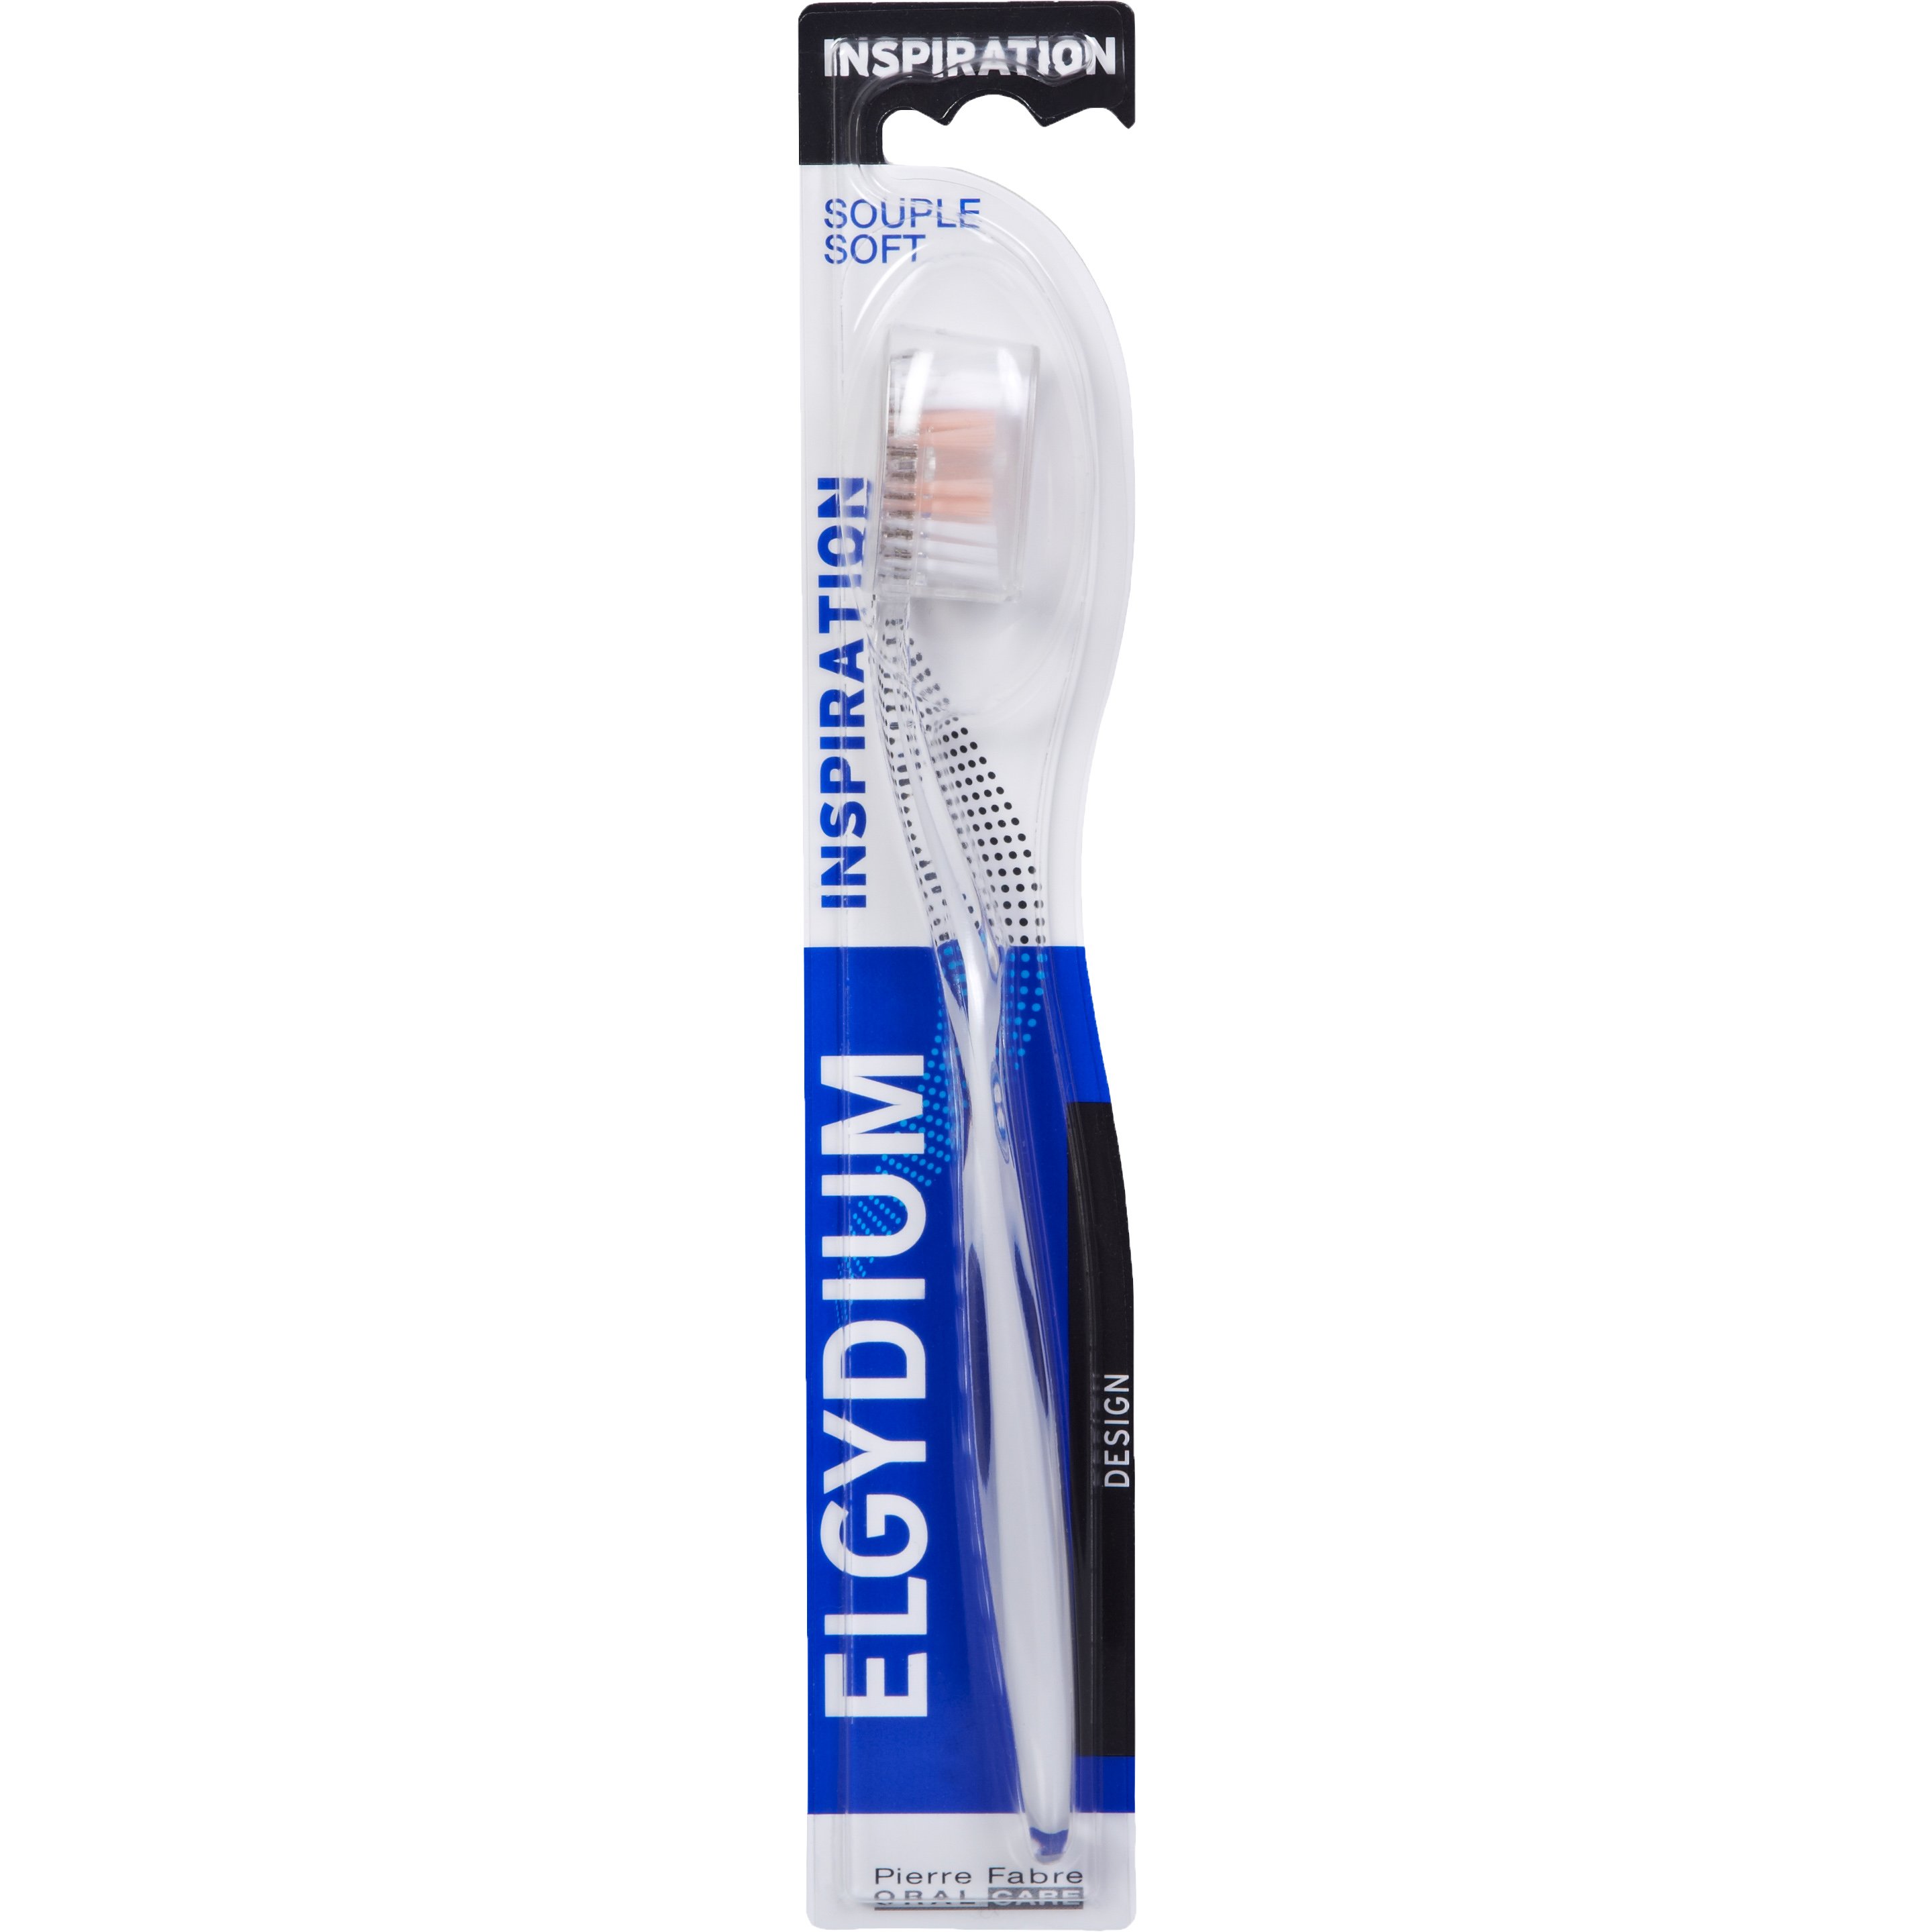 Elgydium Inspiration Medium Εργονομική Οδοντόβουρτσα Για Άνετο Καθαρισμό Και Στα Πιο Δύσκολα Σημεία Μεσαίο Μέγεθος 1 τμχ – μαύρο